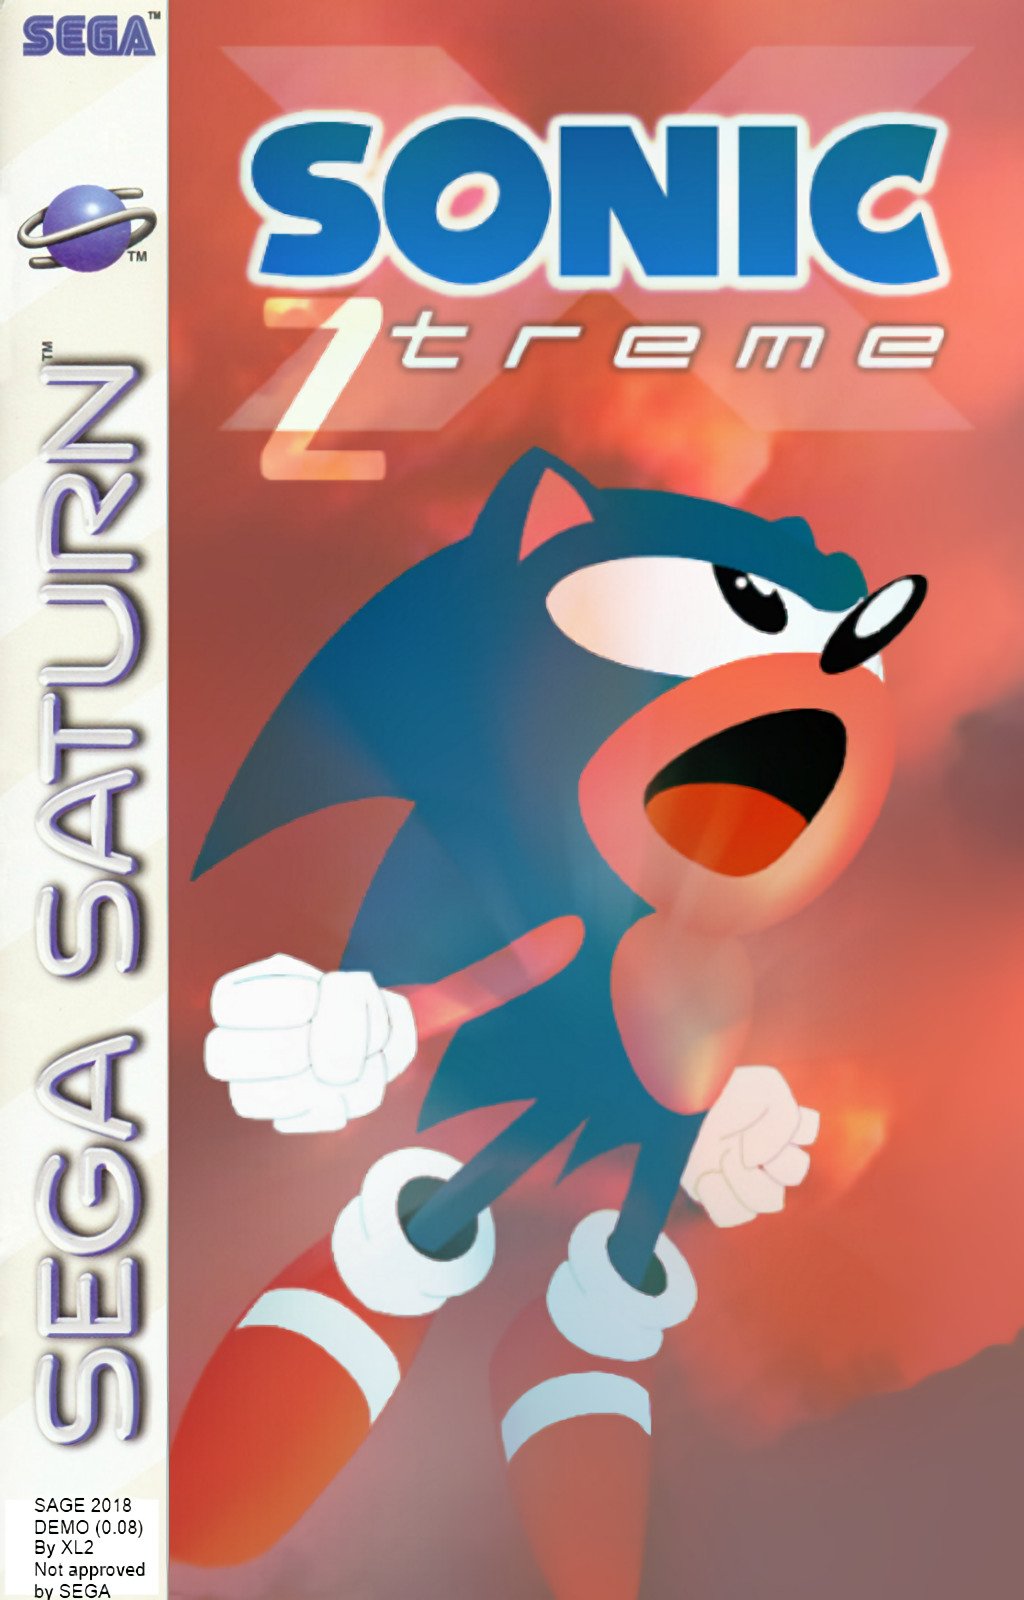 Sonic Z-Treme